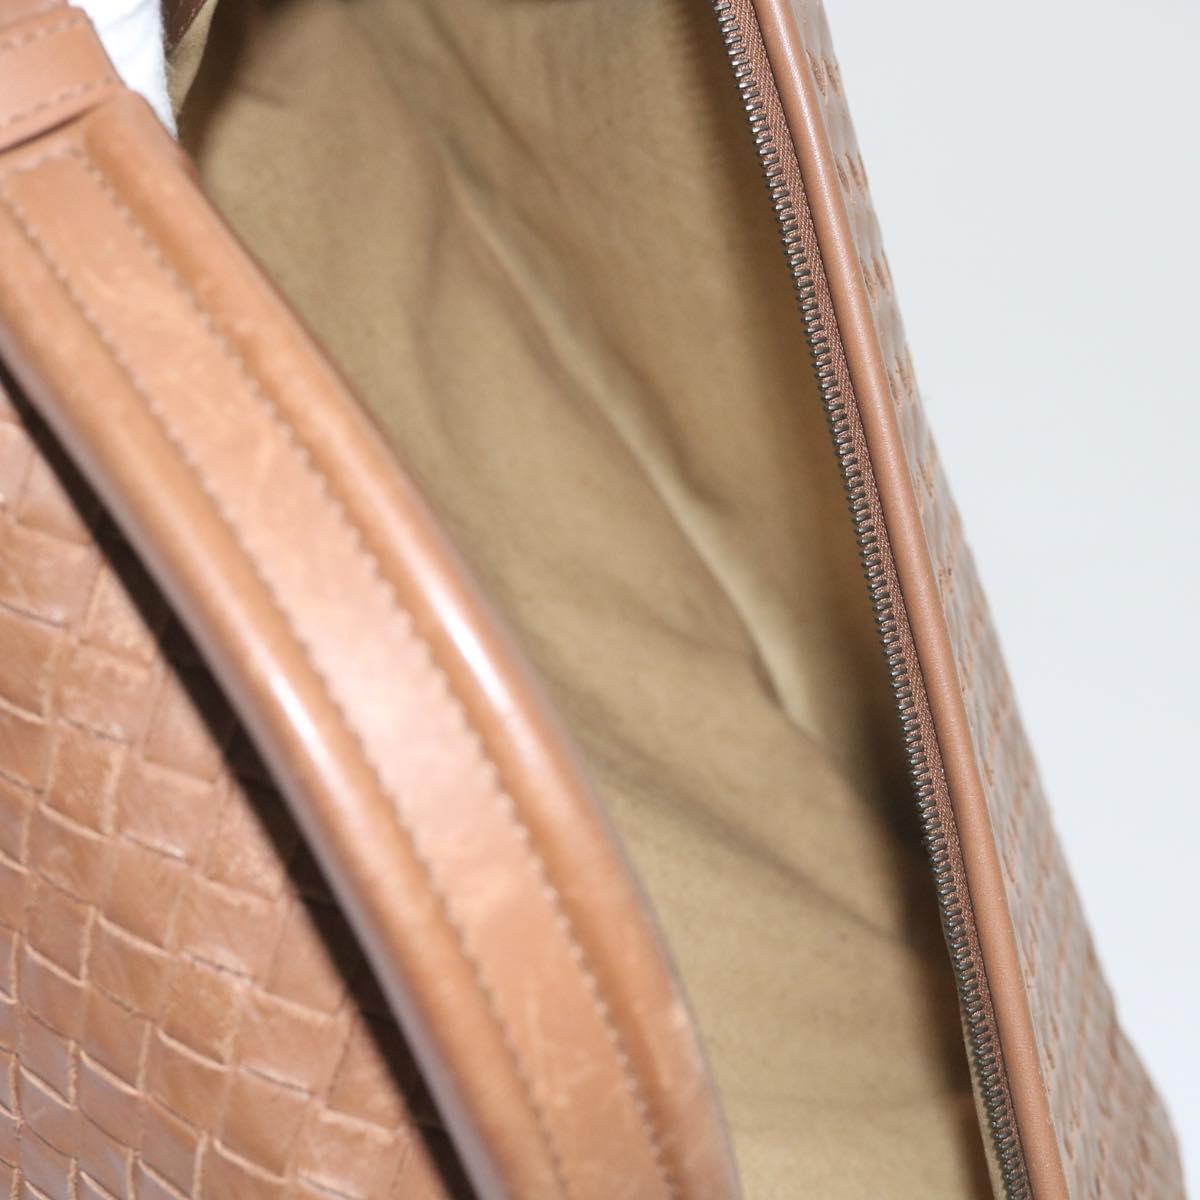 BOTTEGAVENETA INTRECCIATO Business Bag Leather Brown Auth 60304